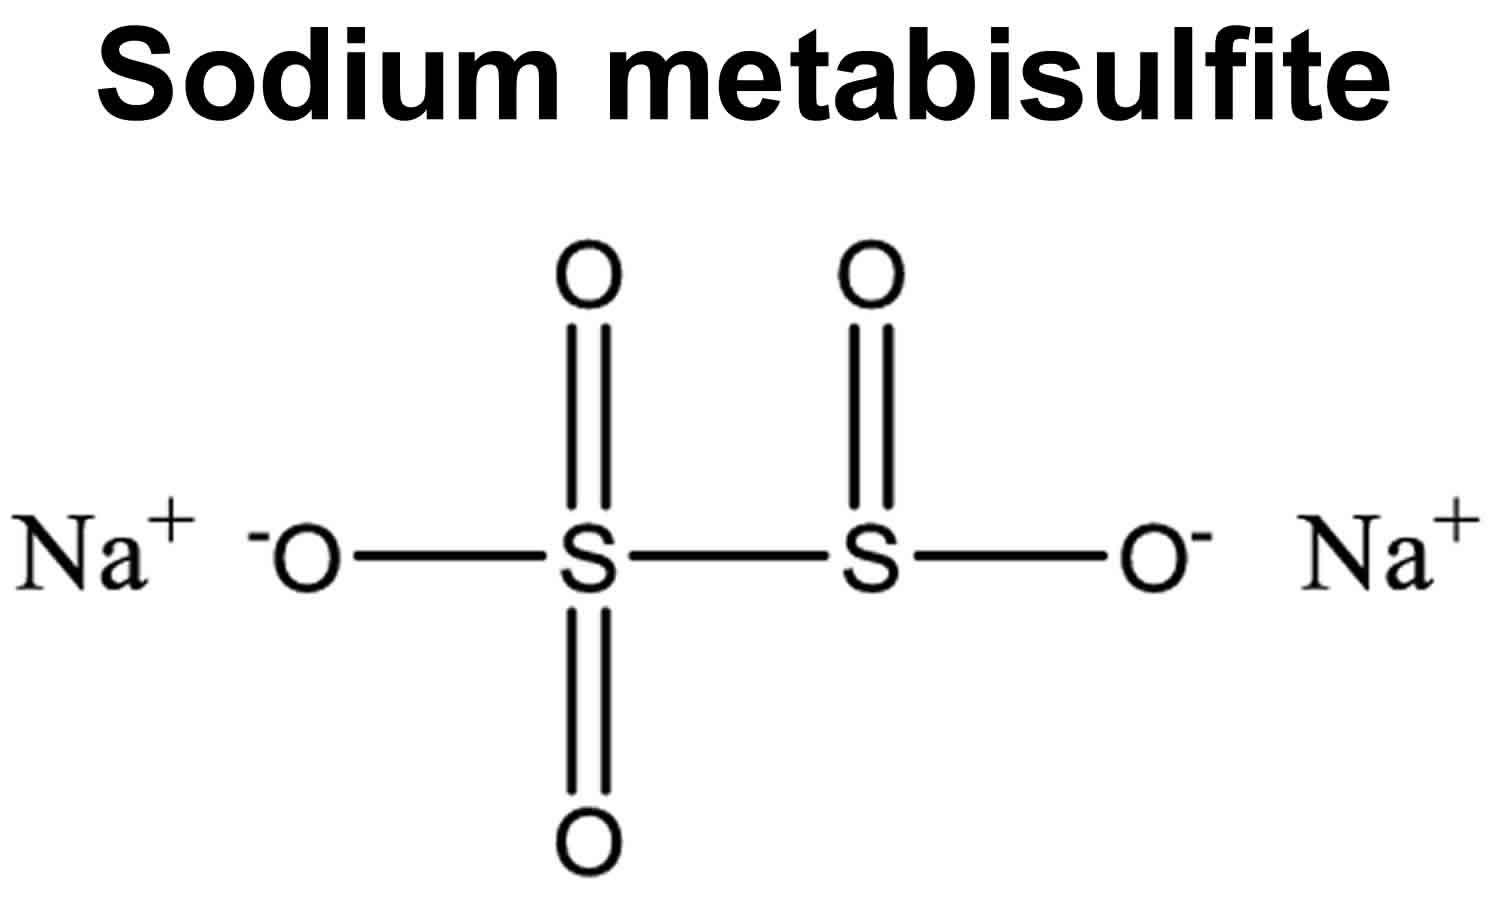 Sodium metabisulfite chemical structure